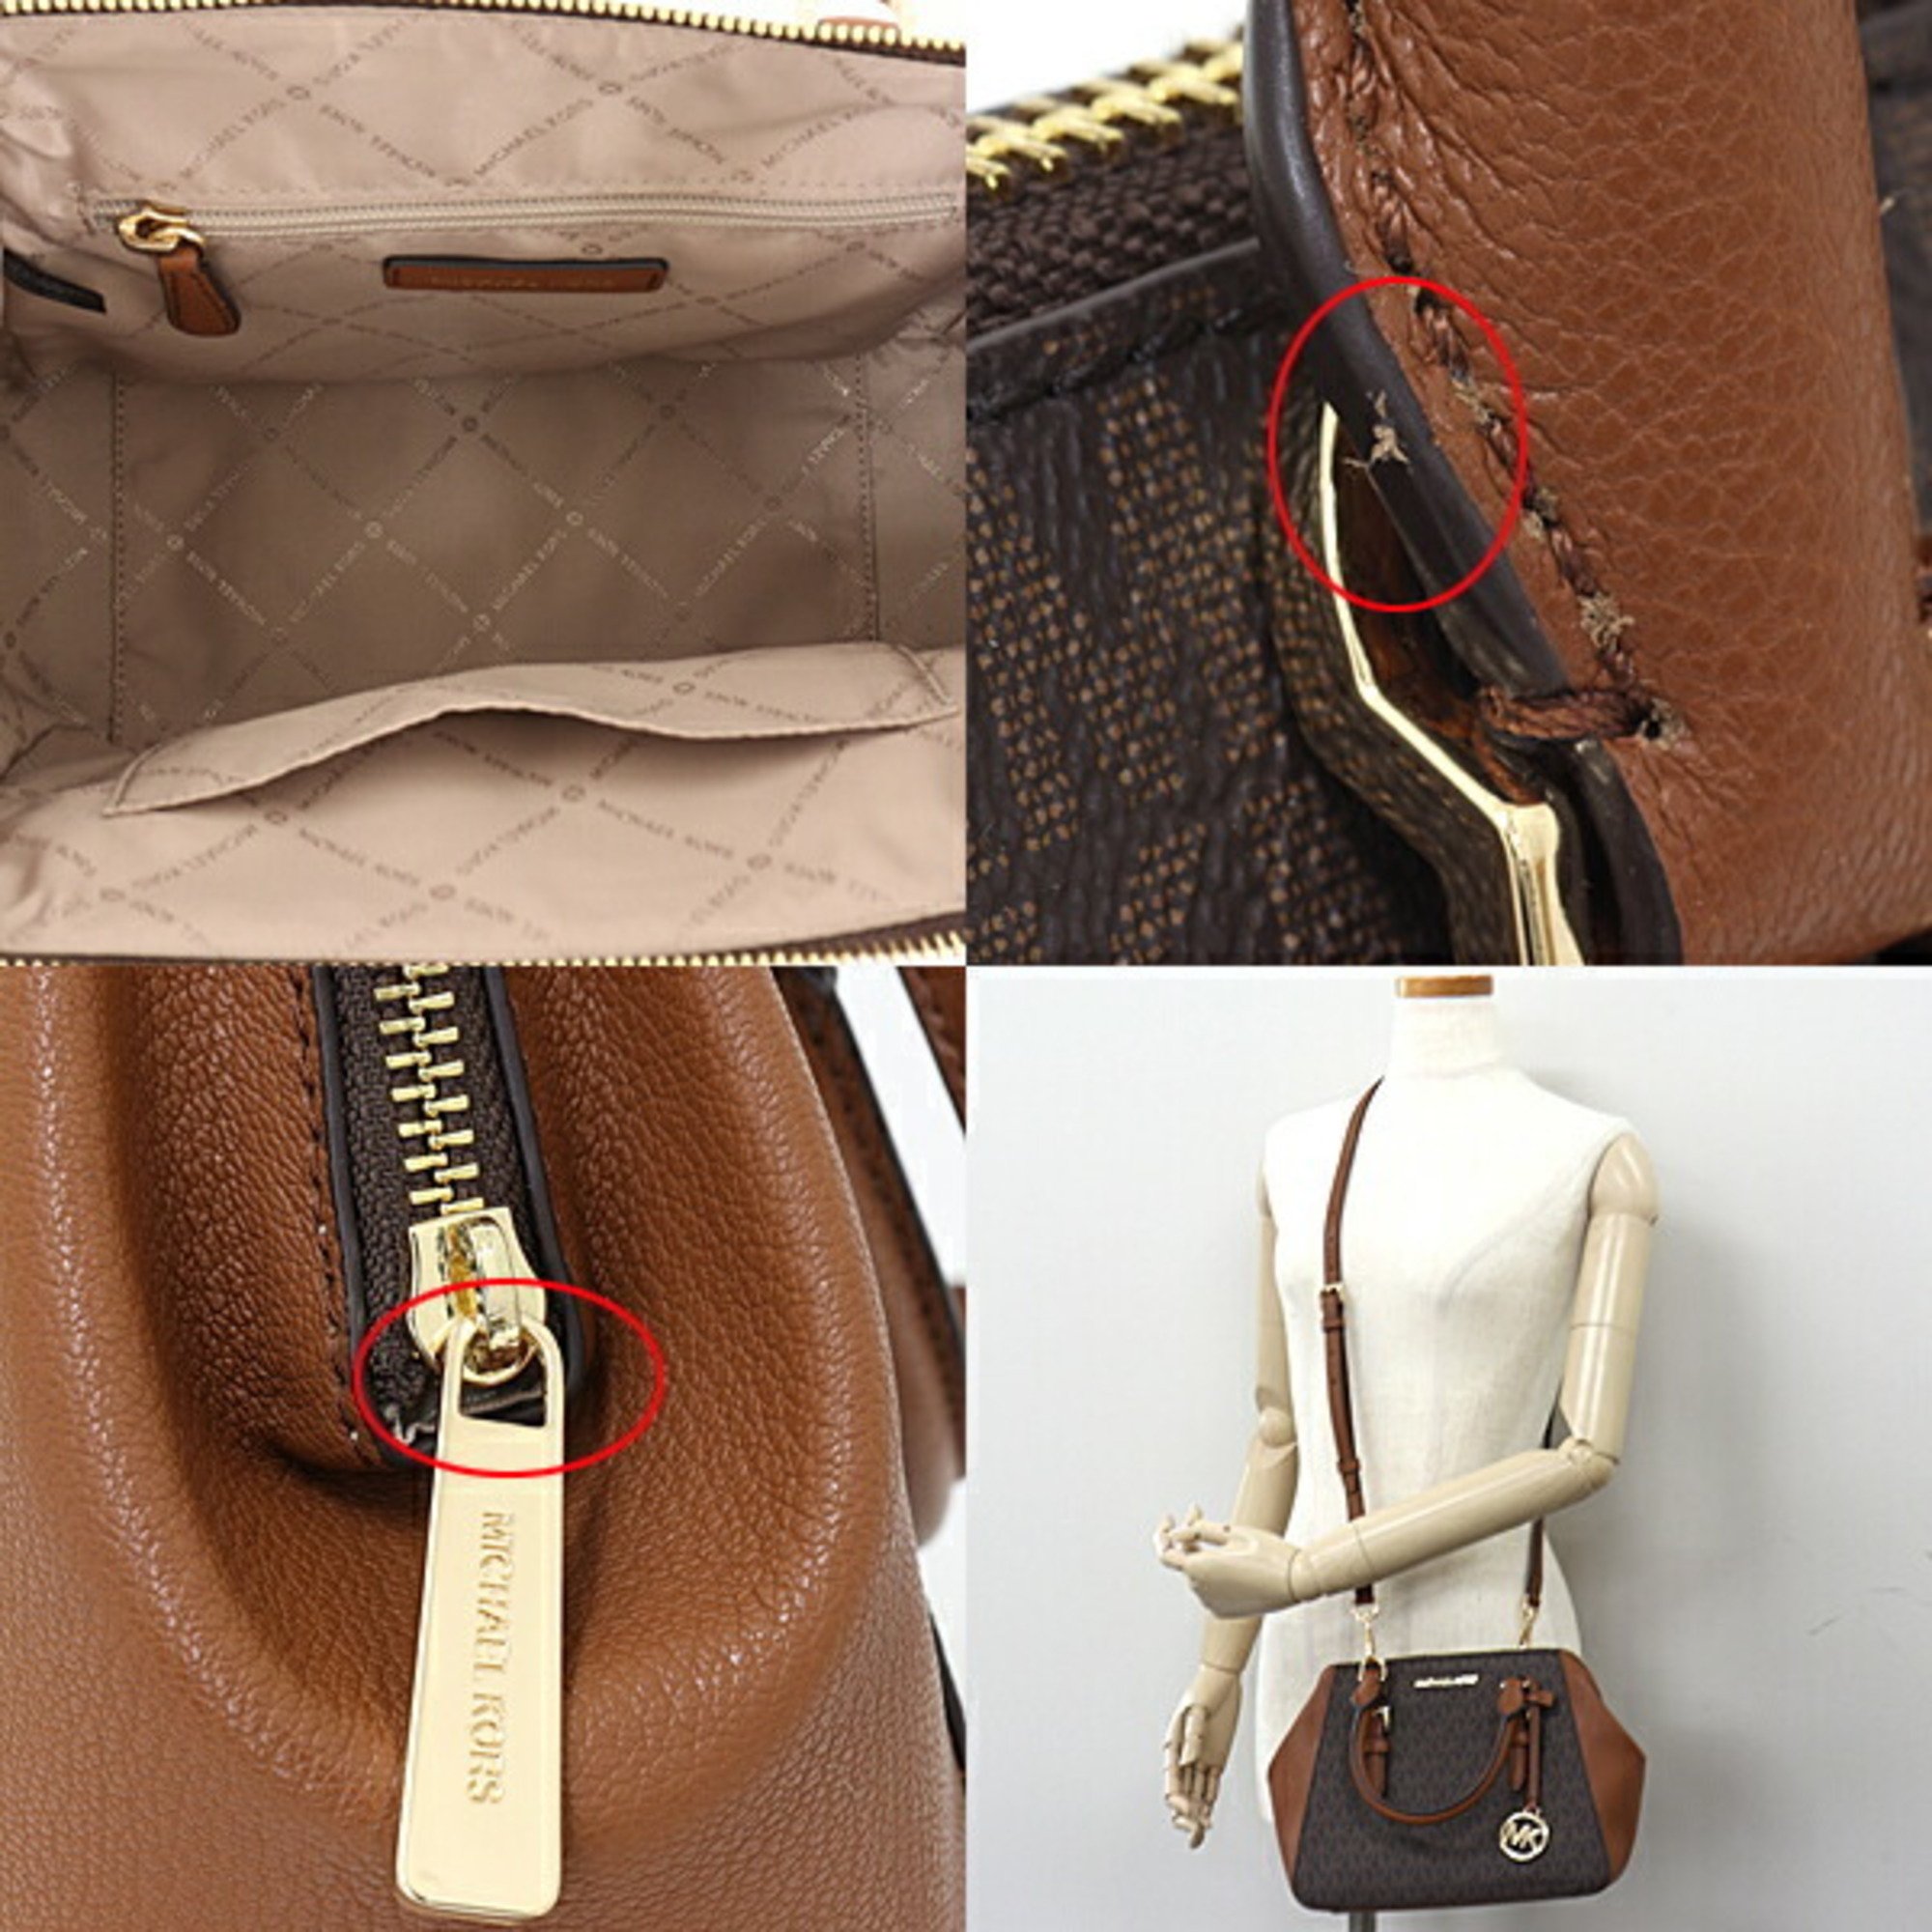 MICHAEL KORS Michael Kors shoulder bag handbag PVC coated canvas leather 35T0GCFM2B brown